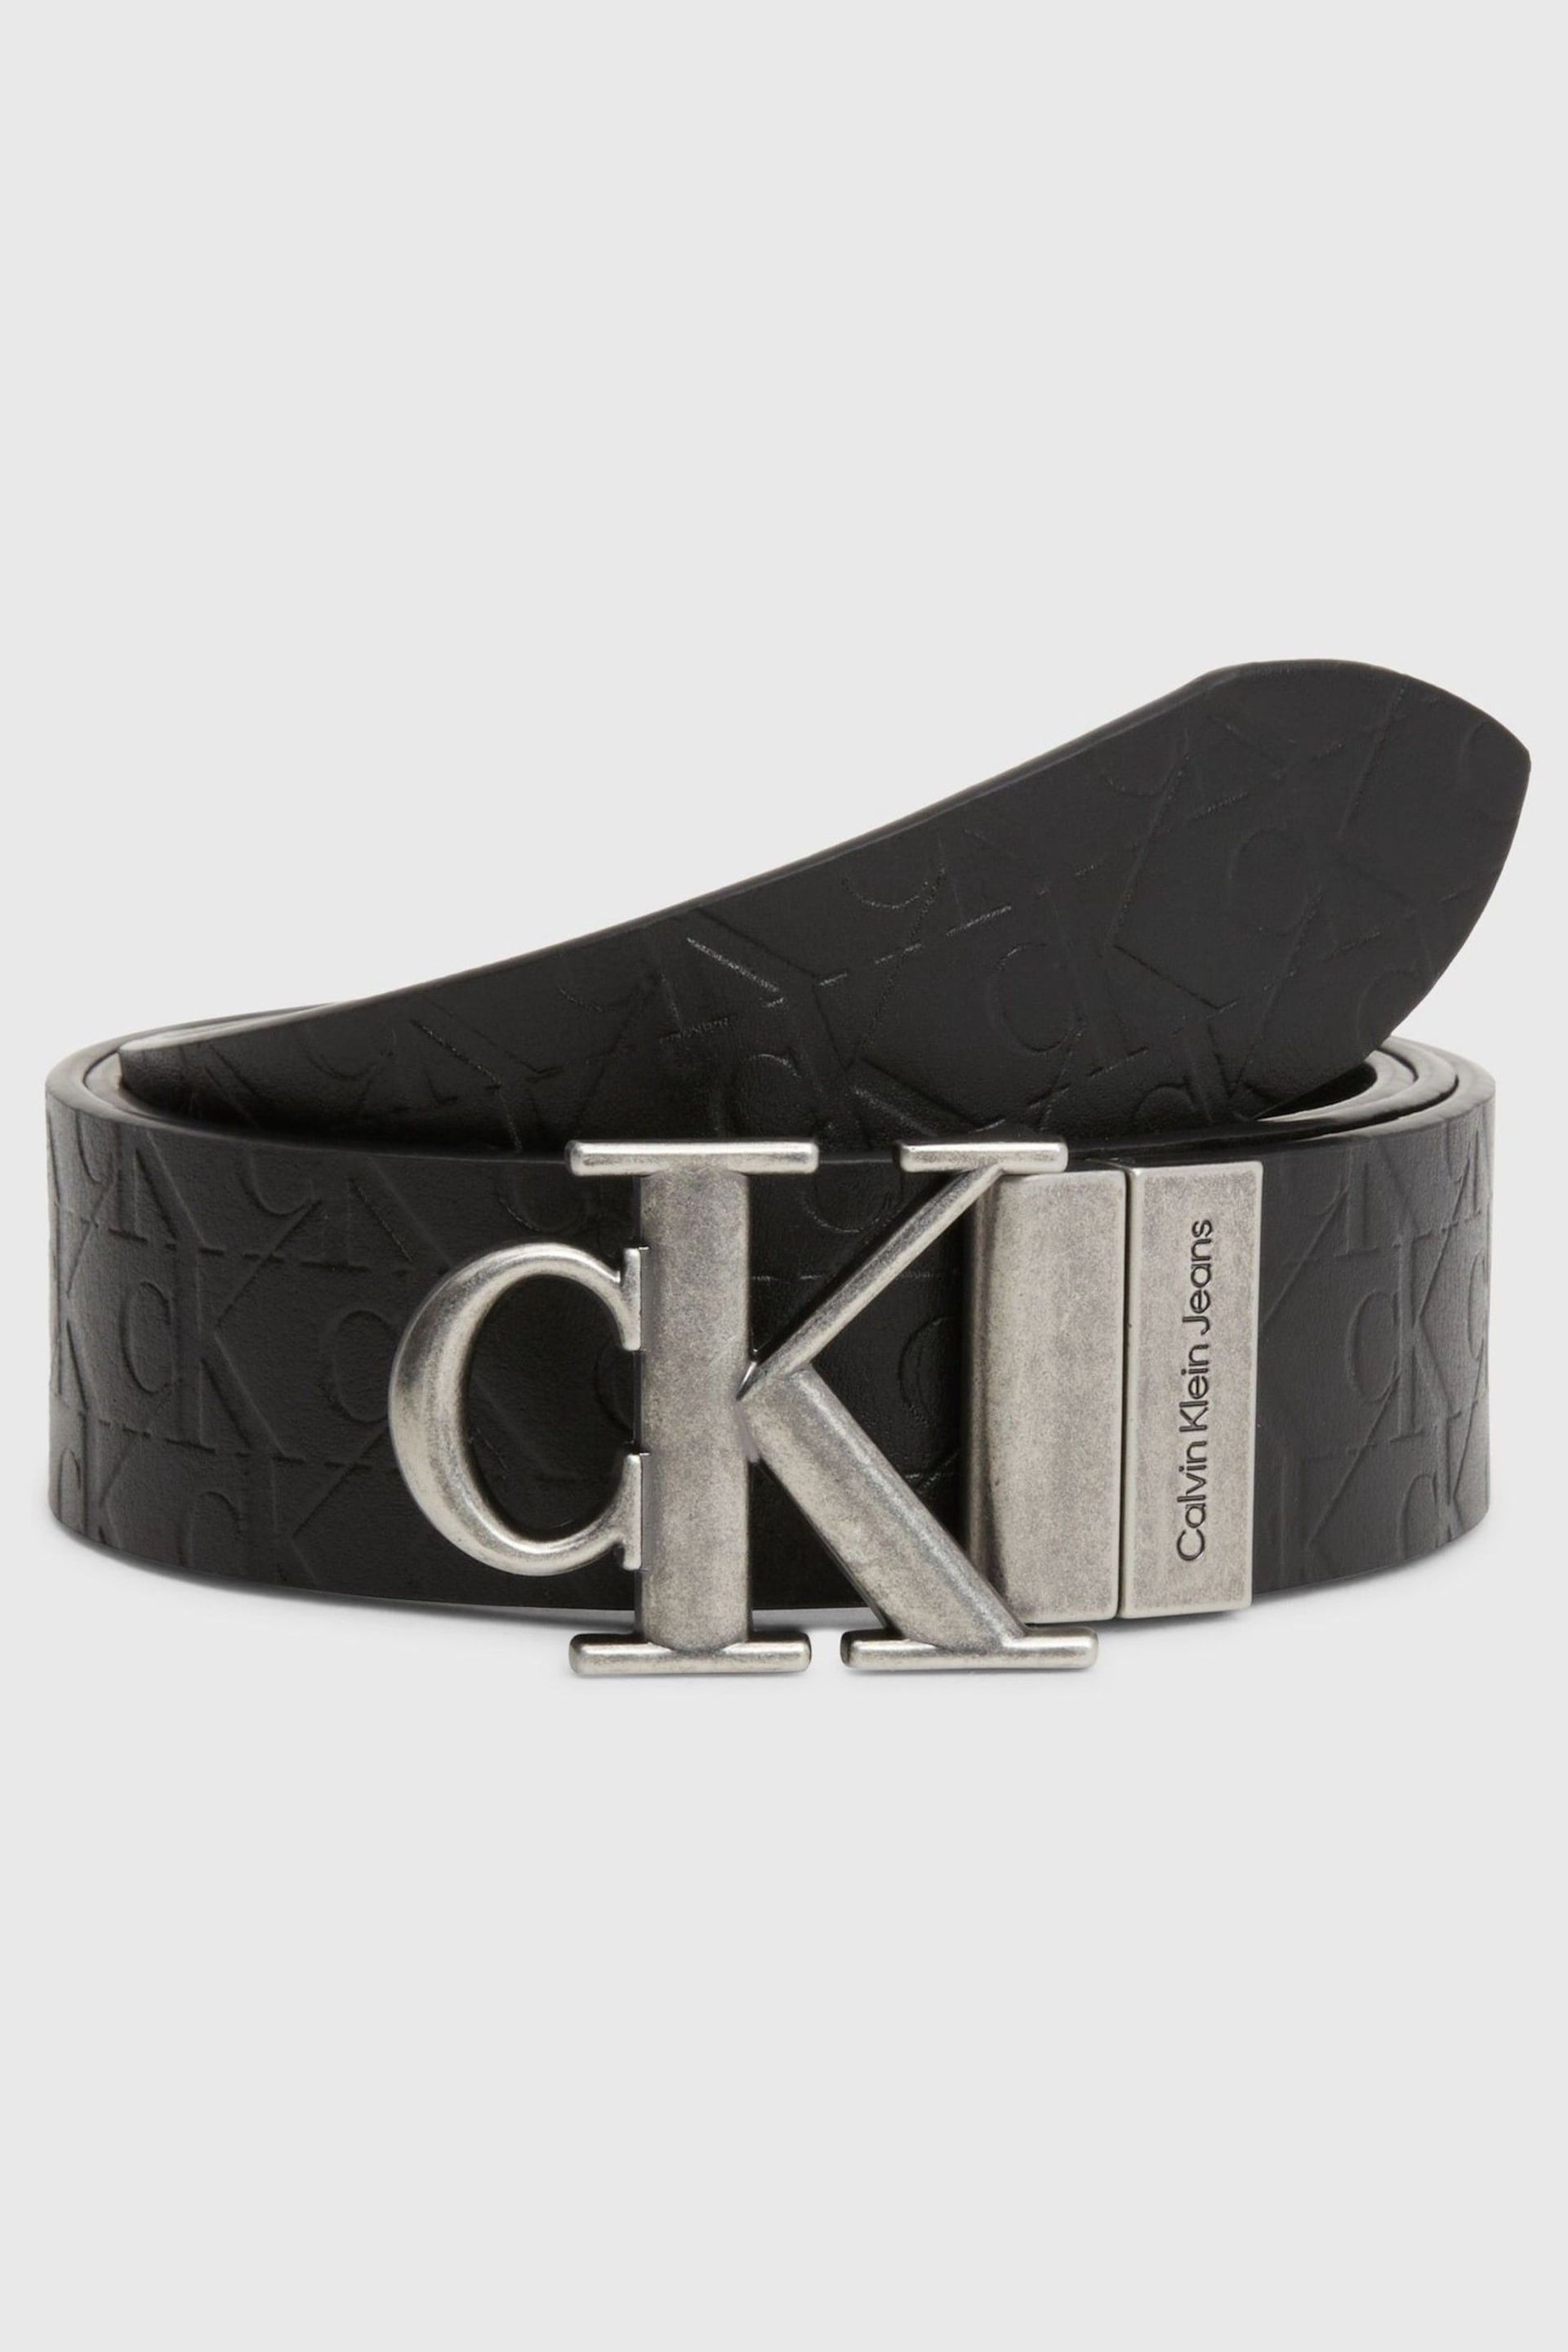 Calvin Klein Black Logo Belt - Image 1 of 4